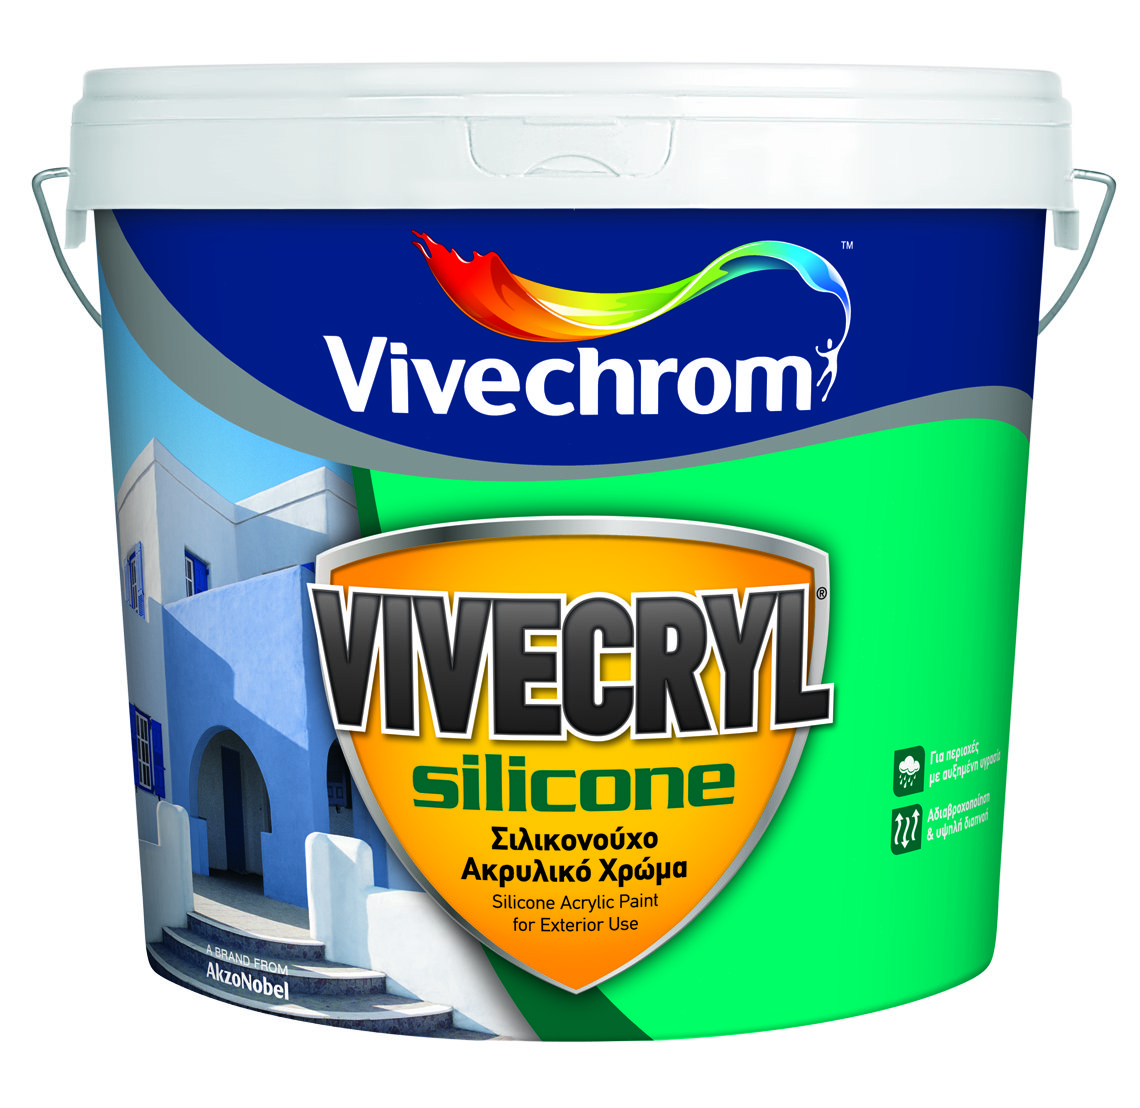 Vivechrom Vivecryl Silicone Οικολογικό Ακρυλικό Χρώμα Matt Finish Λευκό10L